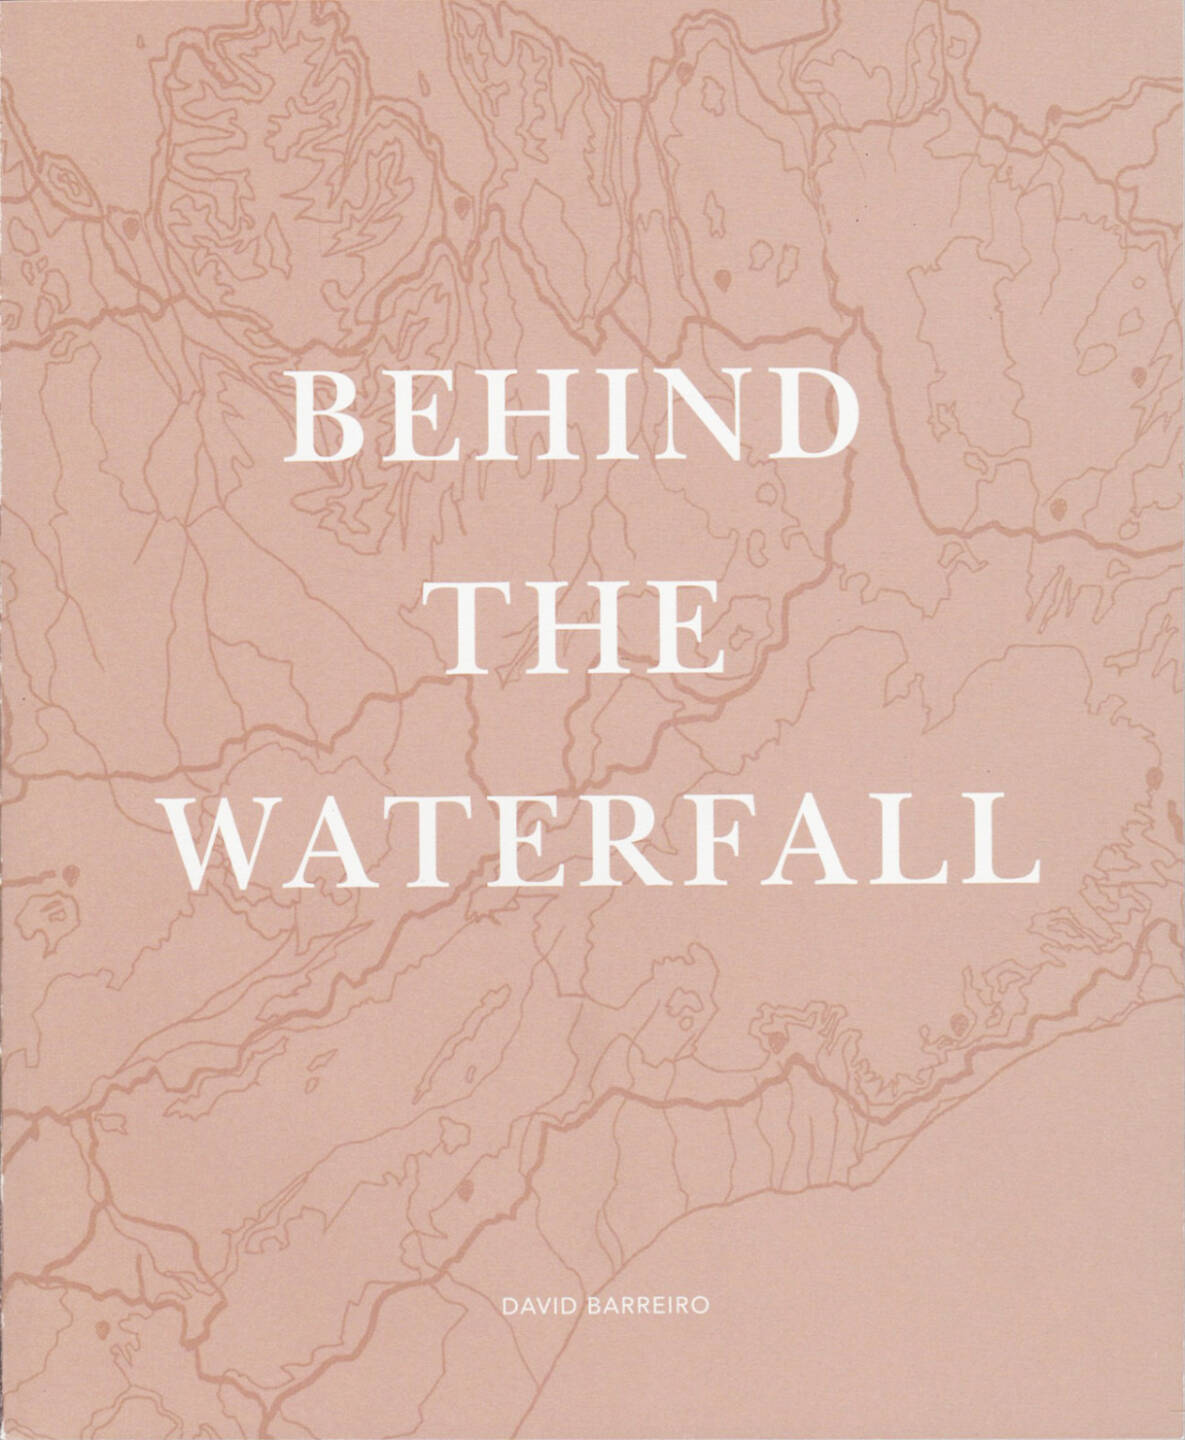 David Barreiro - Behind the waterfall, Dispara 2015, Cover - http://josefchladek.com/book/david_barreiro_-_behind_the_waterfall